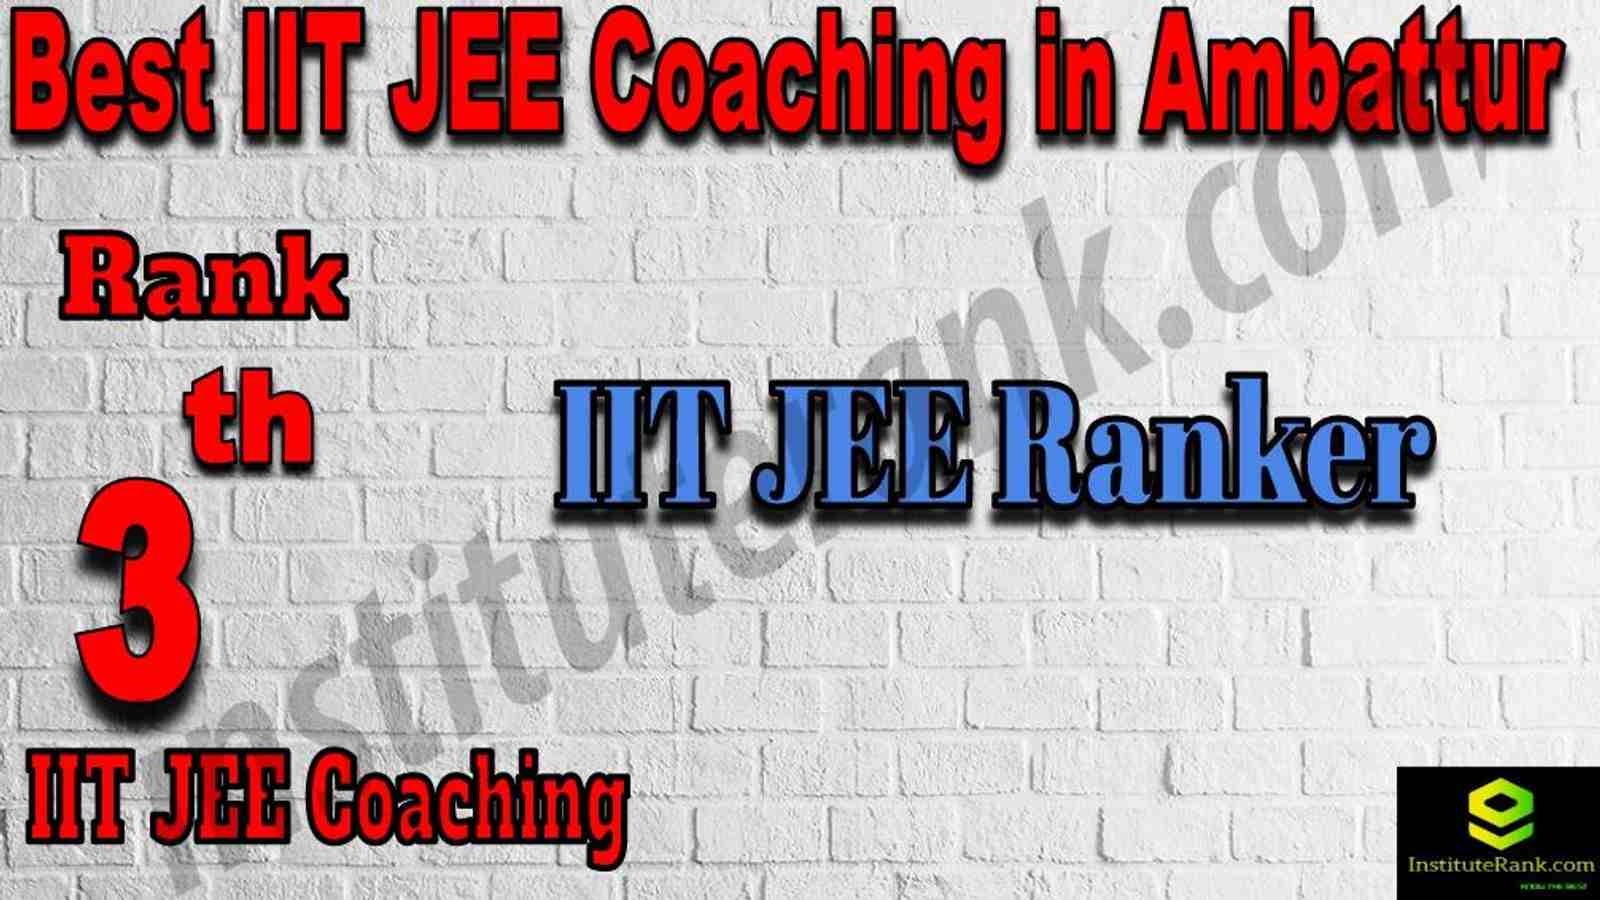 3rd Best IIT JEE Coaching in Ambattur